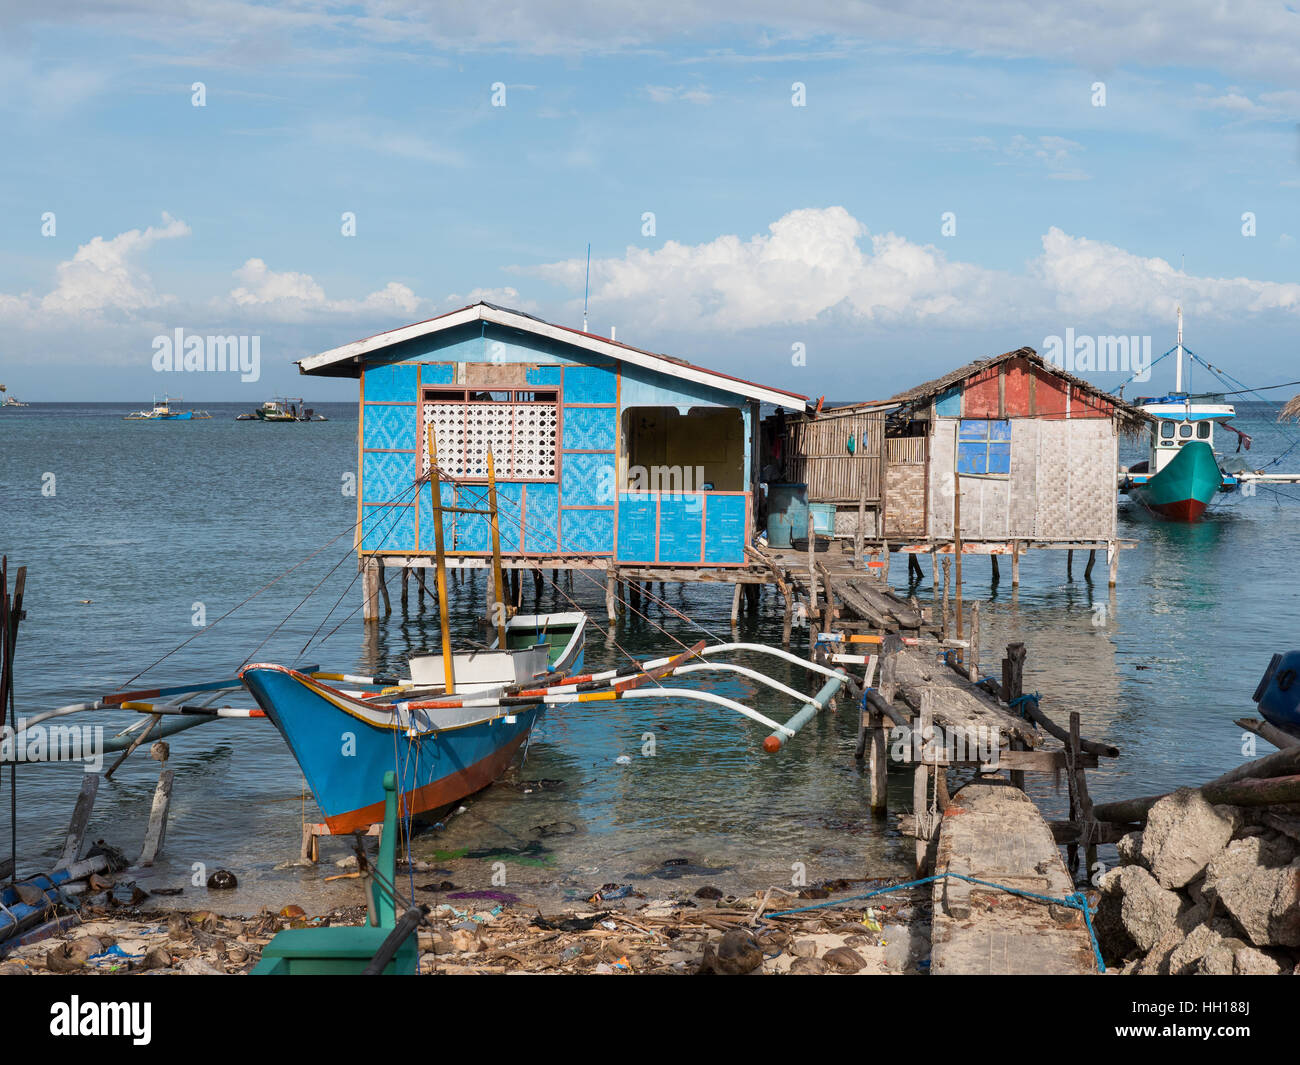 Fishing vessels and fishermen’s homes in Tinoto, a fishing village in Maasim, the province of Sarangani on Mindanao. Stock Photo